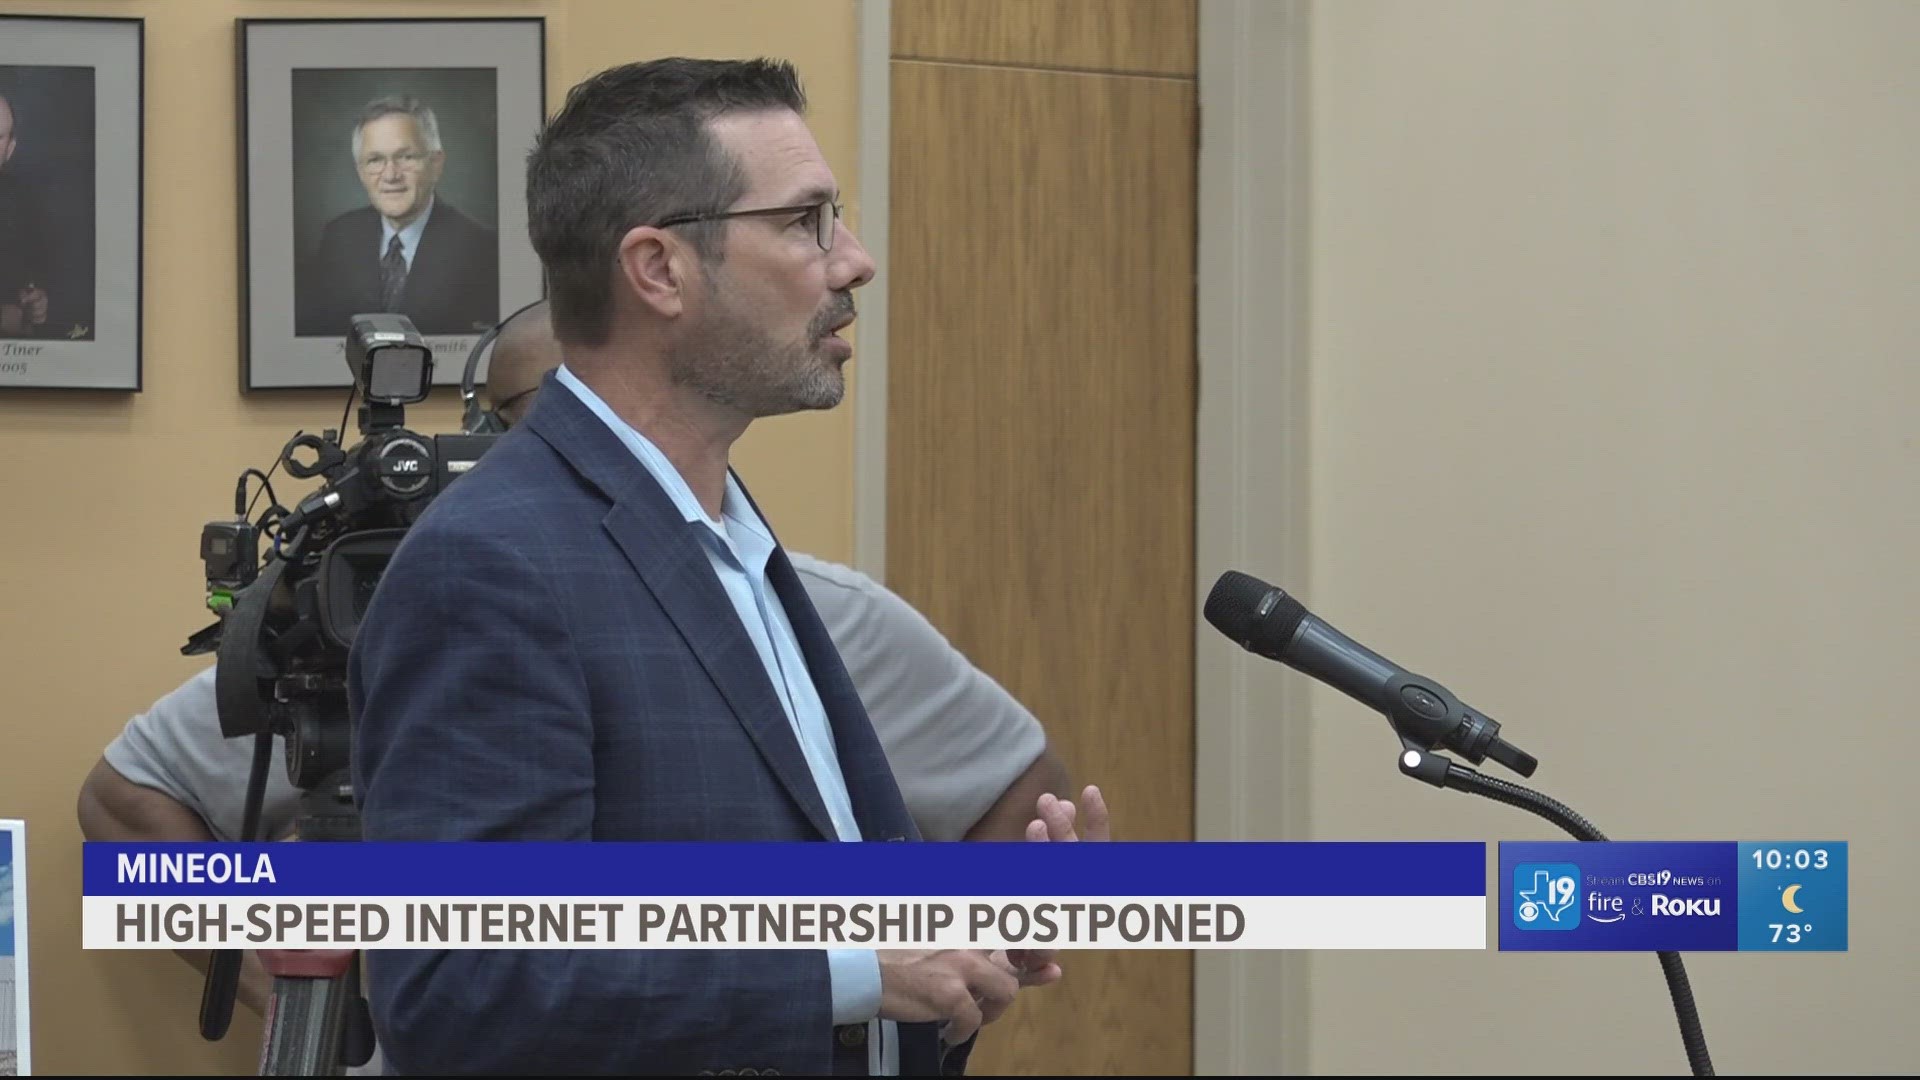 High-speed internet partnership postponed for Mineola residents